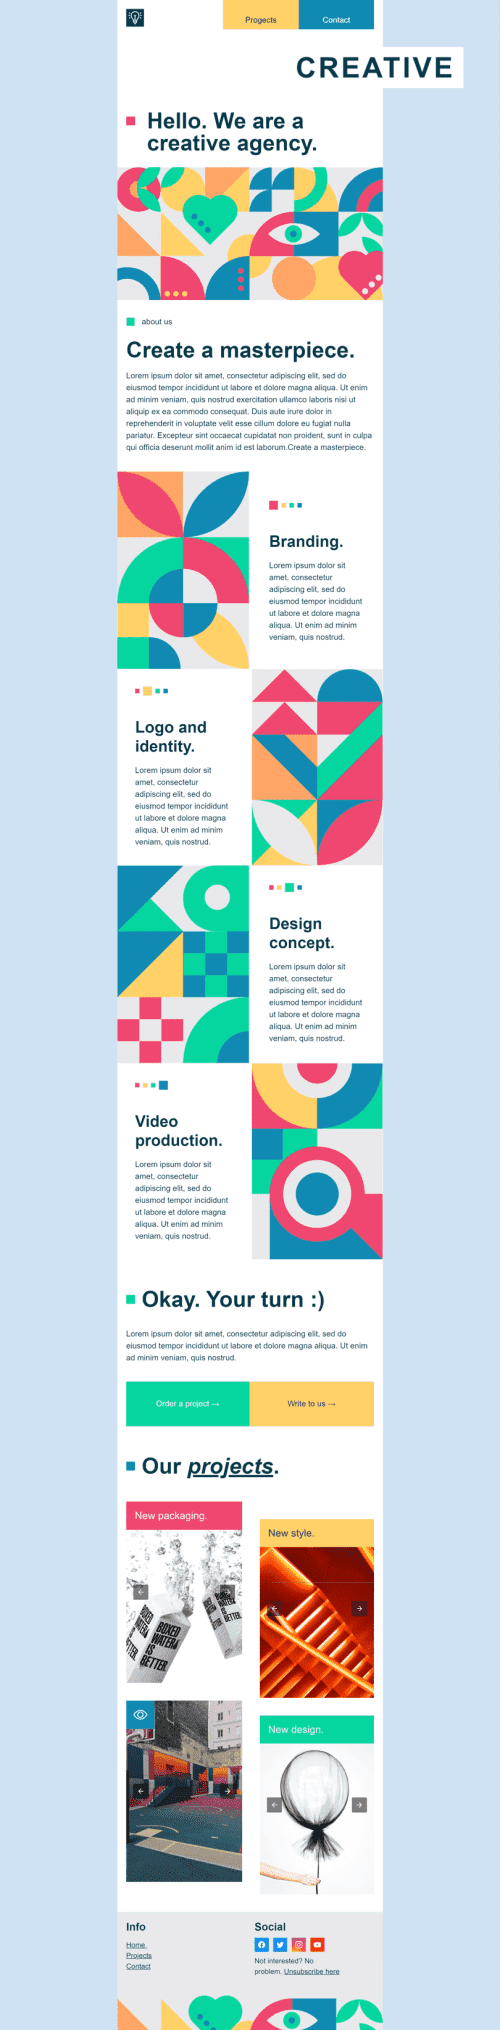 Промо шаблон письма «Креативное агентство» для индустрии «Дизайн» дектопный вид